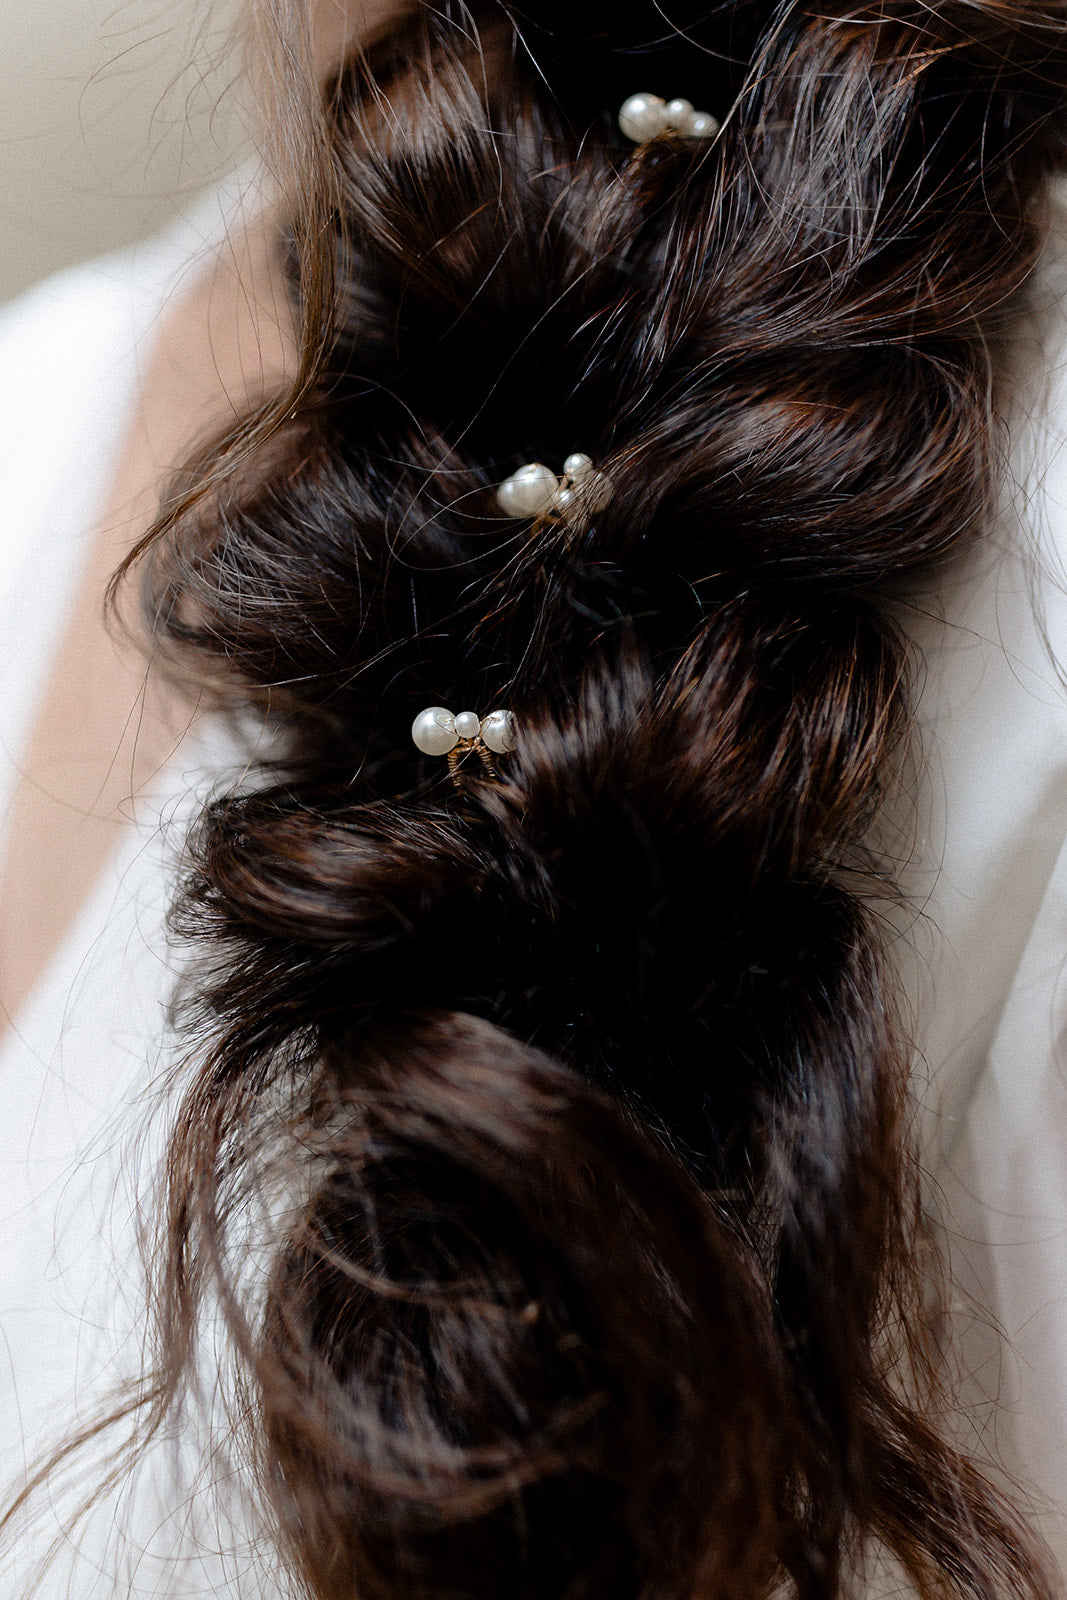 𝓙𝓪𝔂'𝓼 𝓟𝓲𝓷𝓼 ⛈  Headband hairstyles, Aesthetic hair